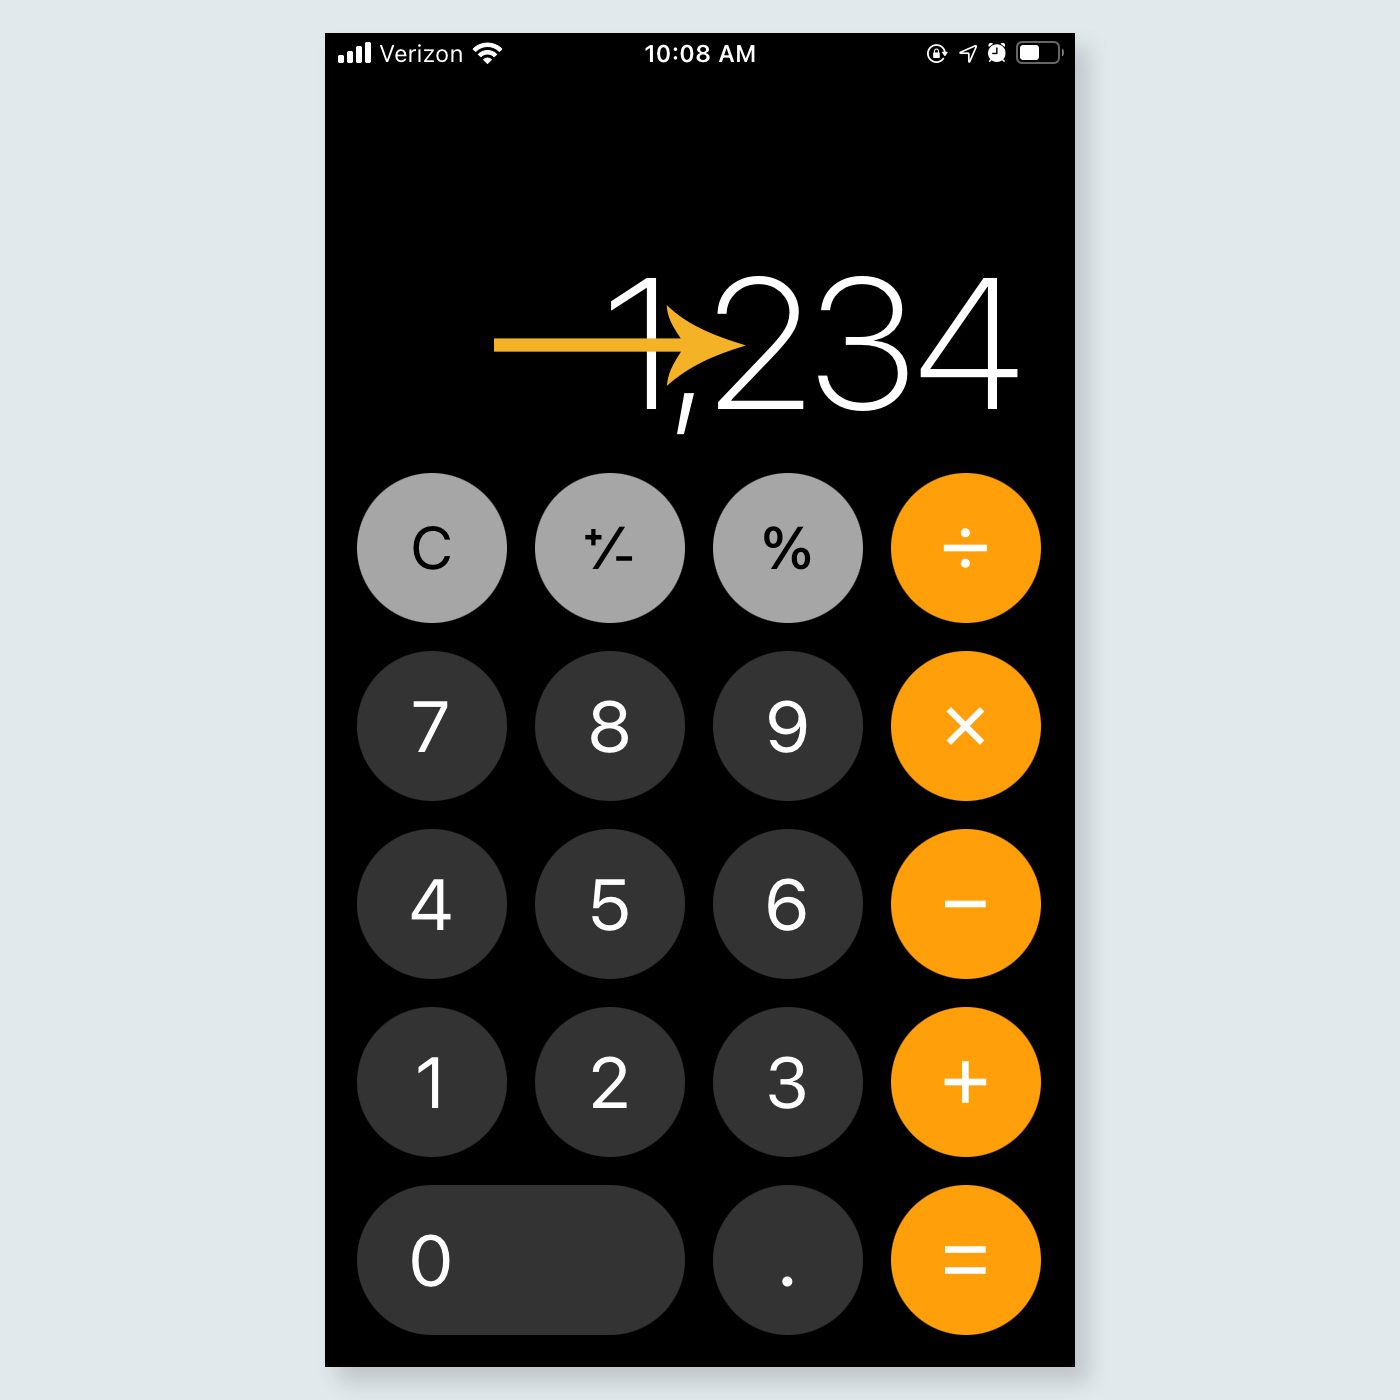 iphone tricks - Backspace on the calculator app